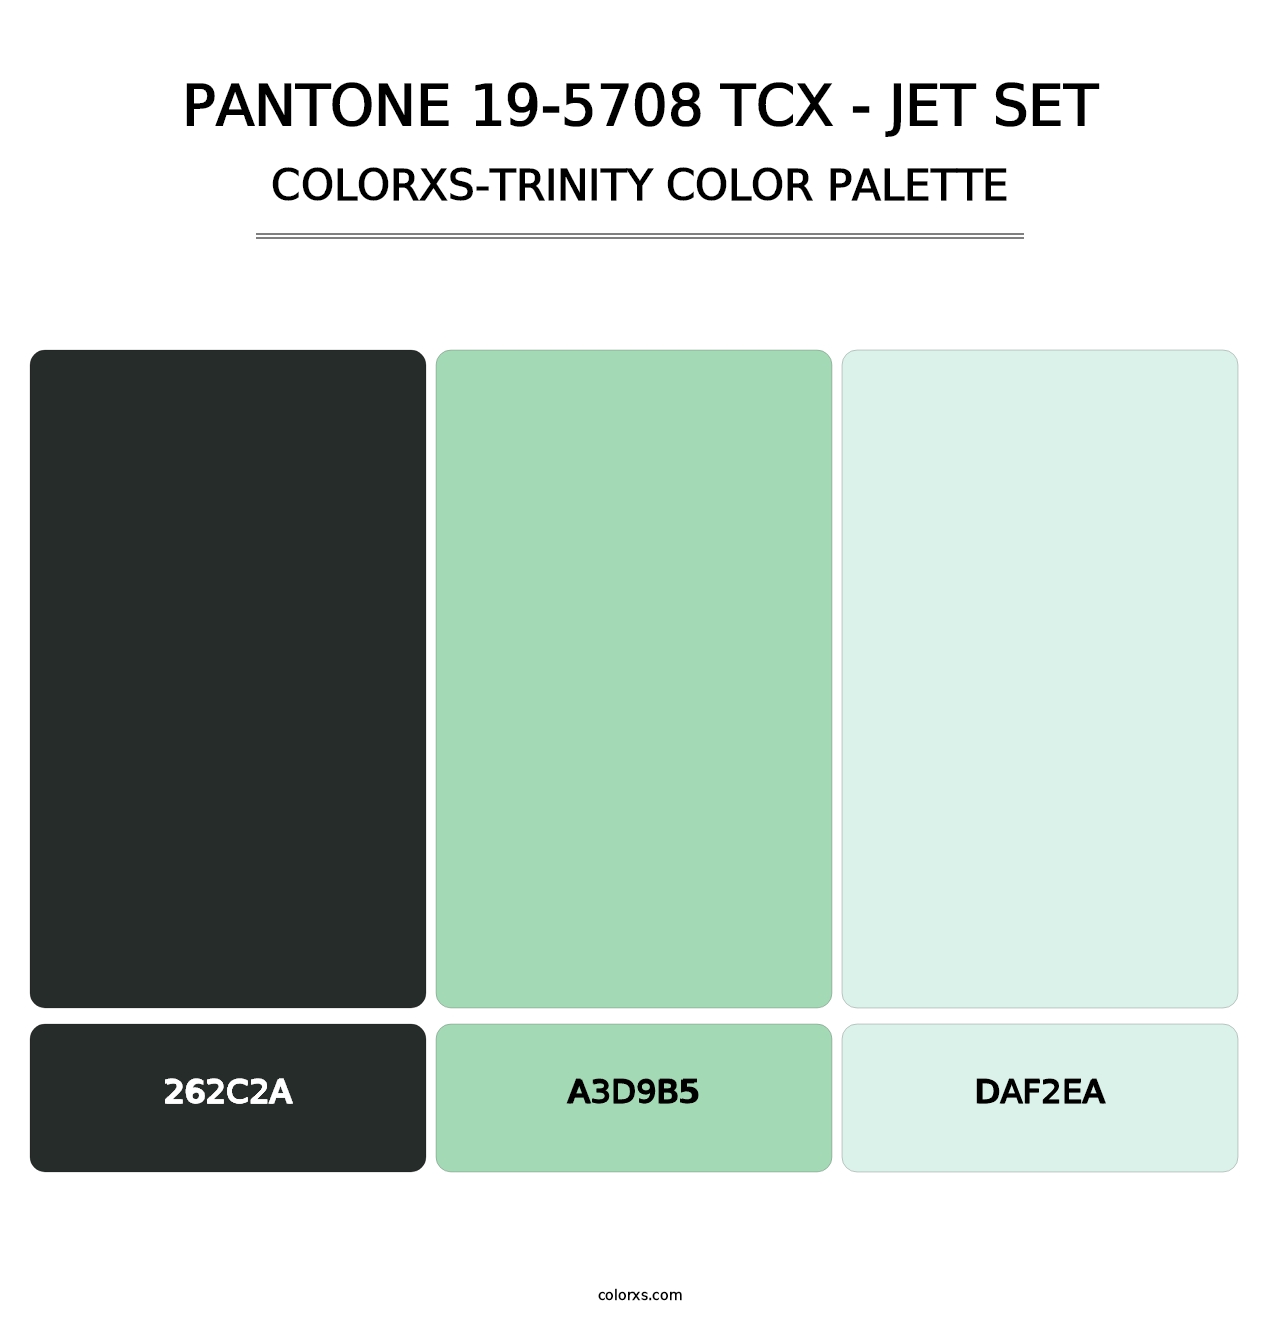 PANTONE 19-5708 TCX - Jet Set - Colorxs Trinity Palette